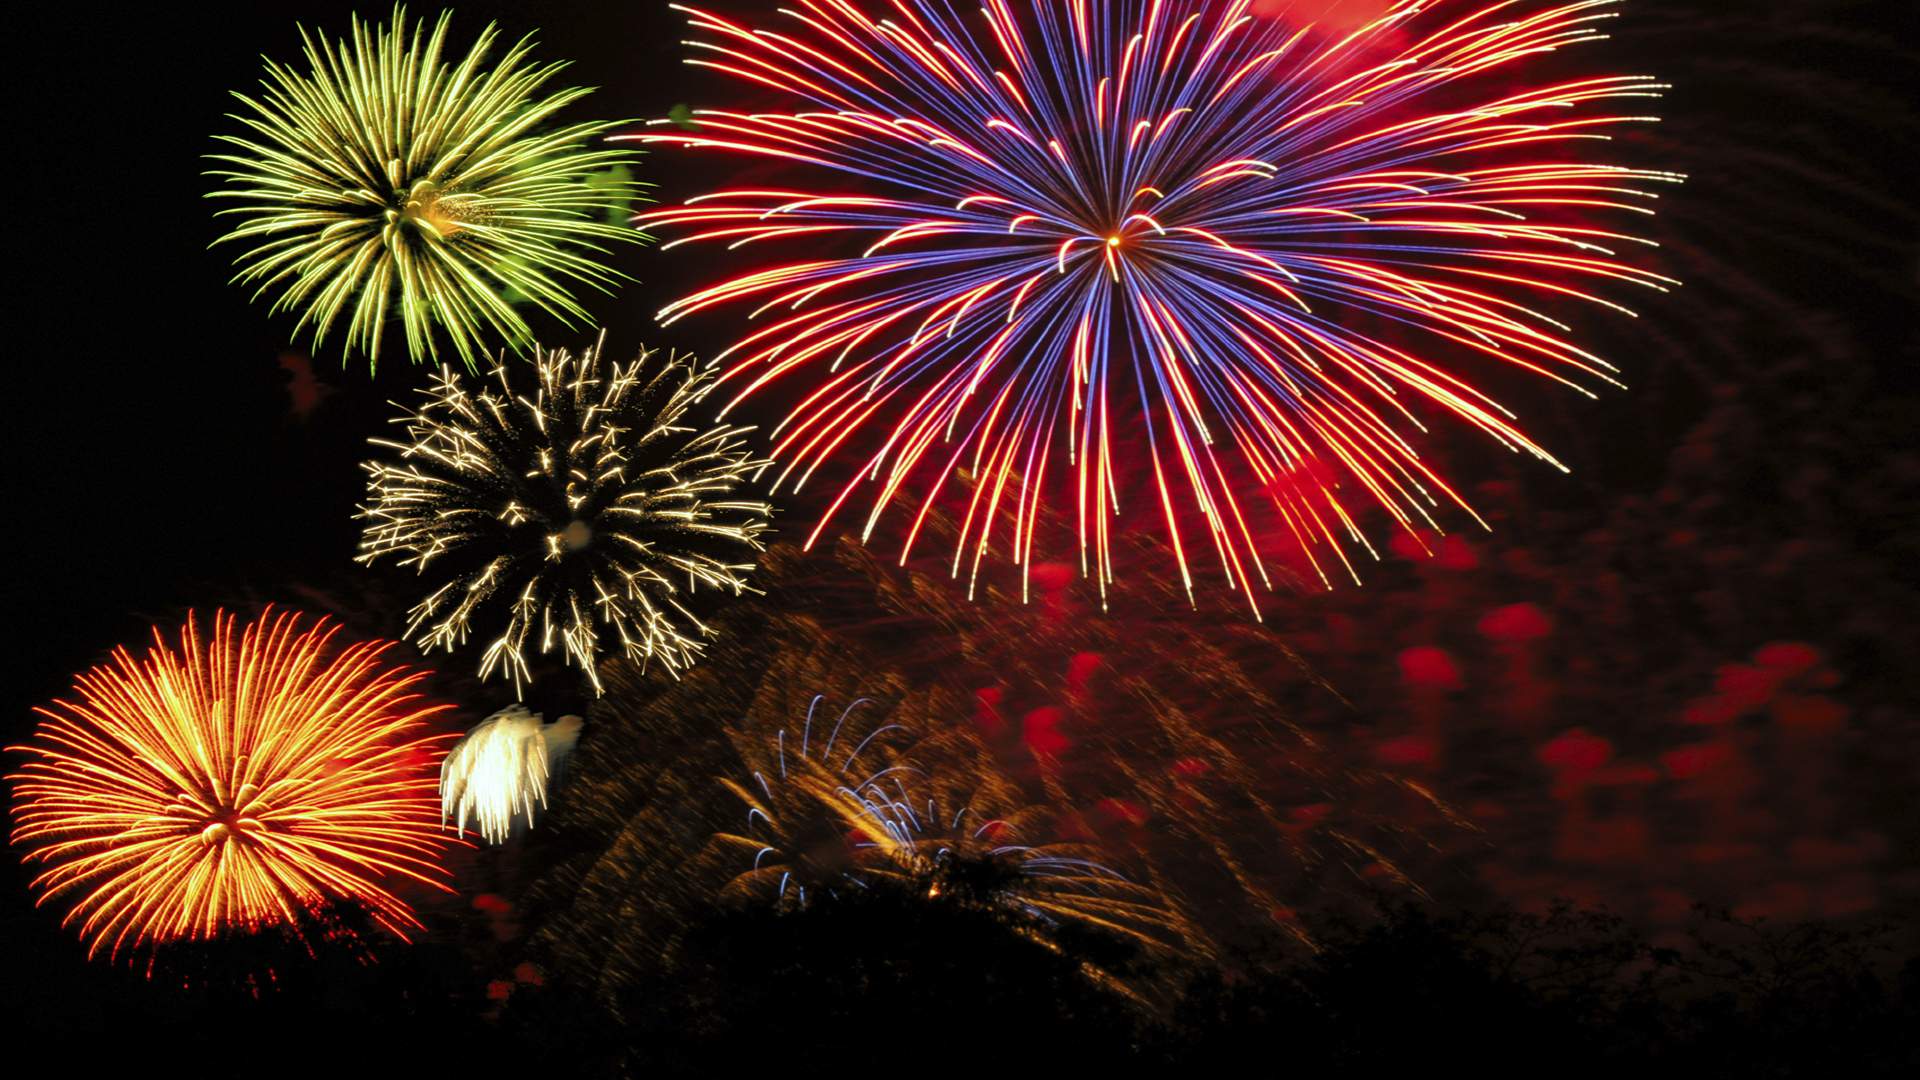 Ft Myers Beach Independence Day Parade Fireworks Traum Urlaub Florida